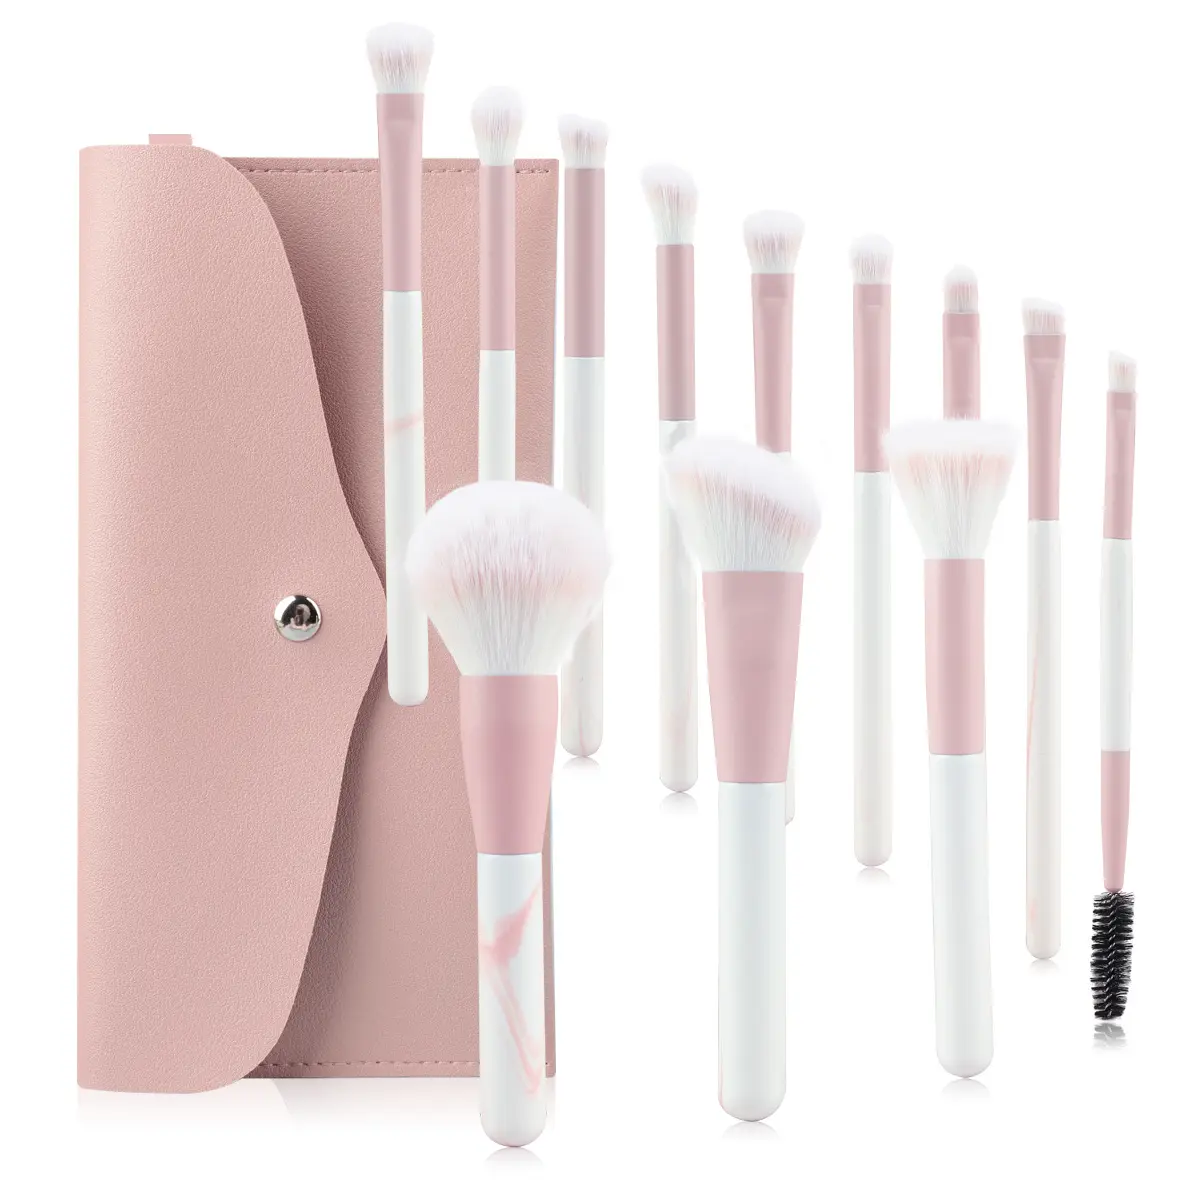 12 pcs Premium Synthetic Kabuki Brush Cosmetics Foundation Powder Blush Blending Face Eye Shadows Makeup Brush Set